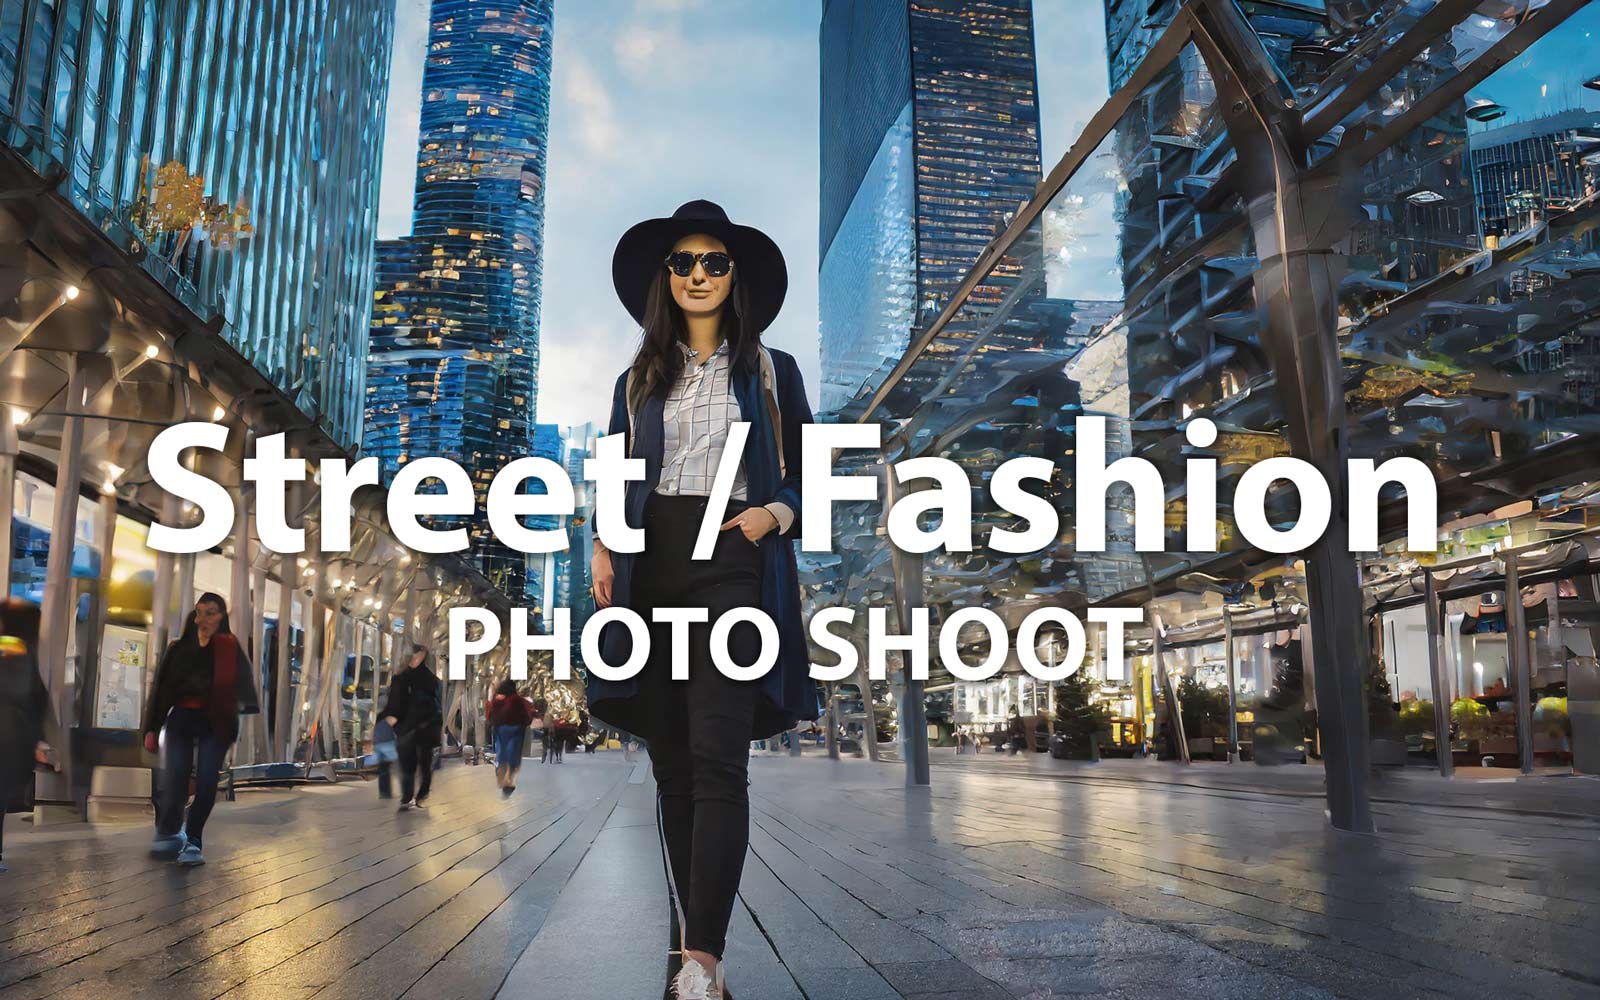 Street fashion photo shoot with Tdot Shots in Toronto Canada - photography meetup